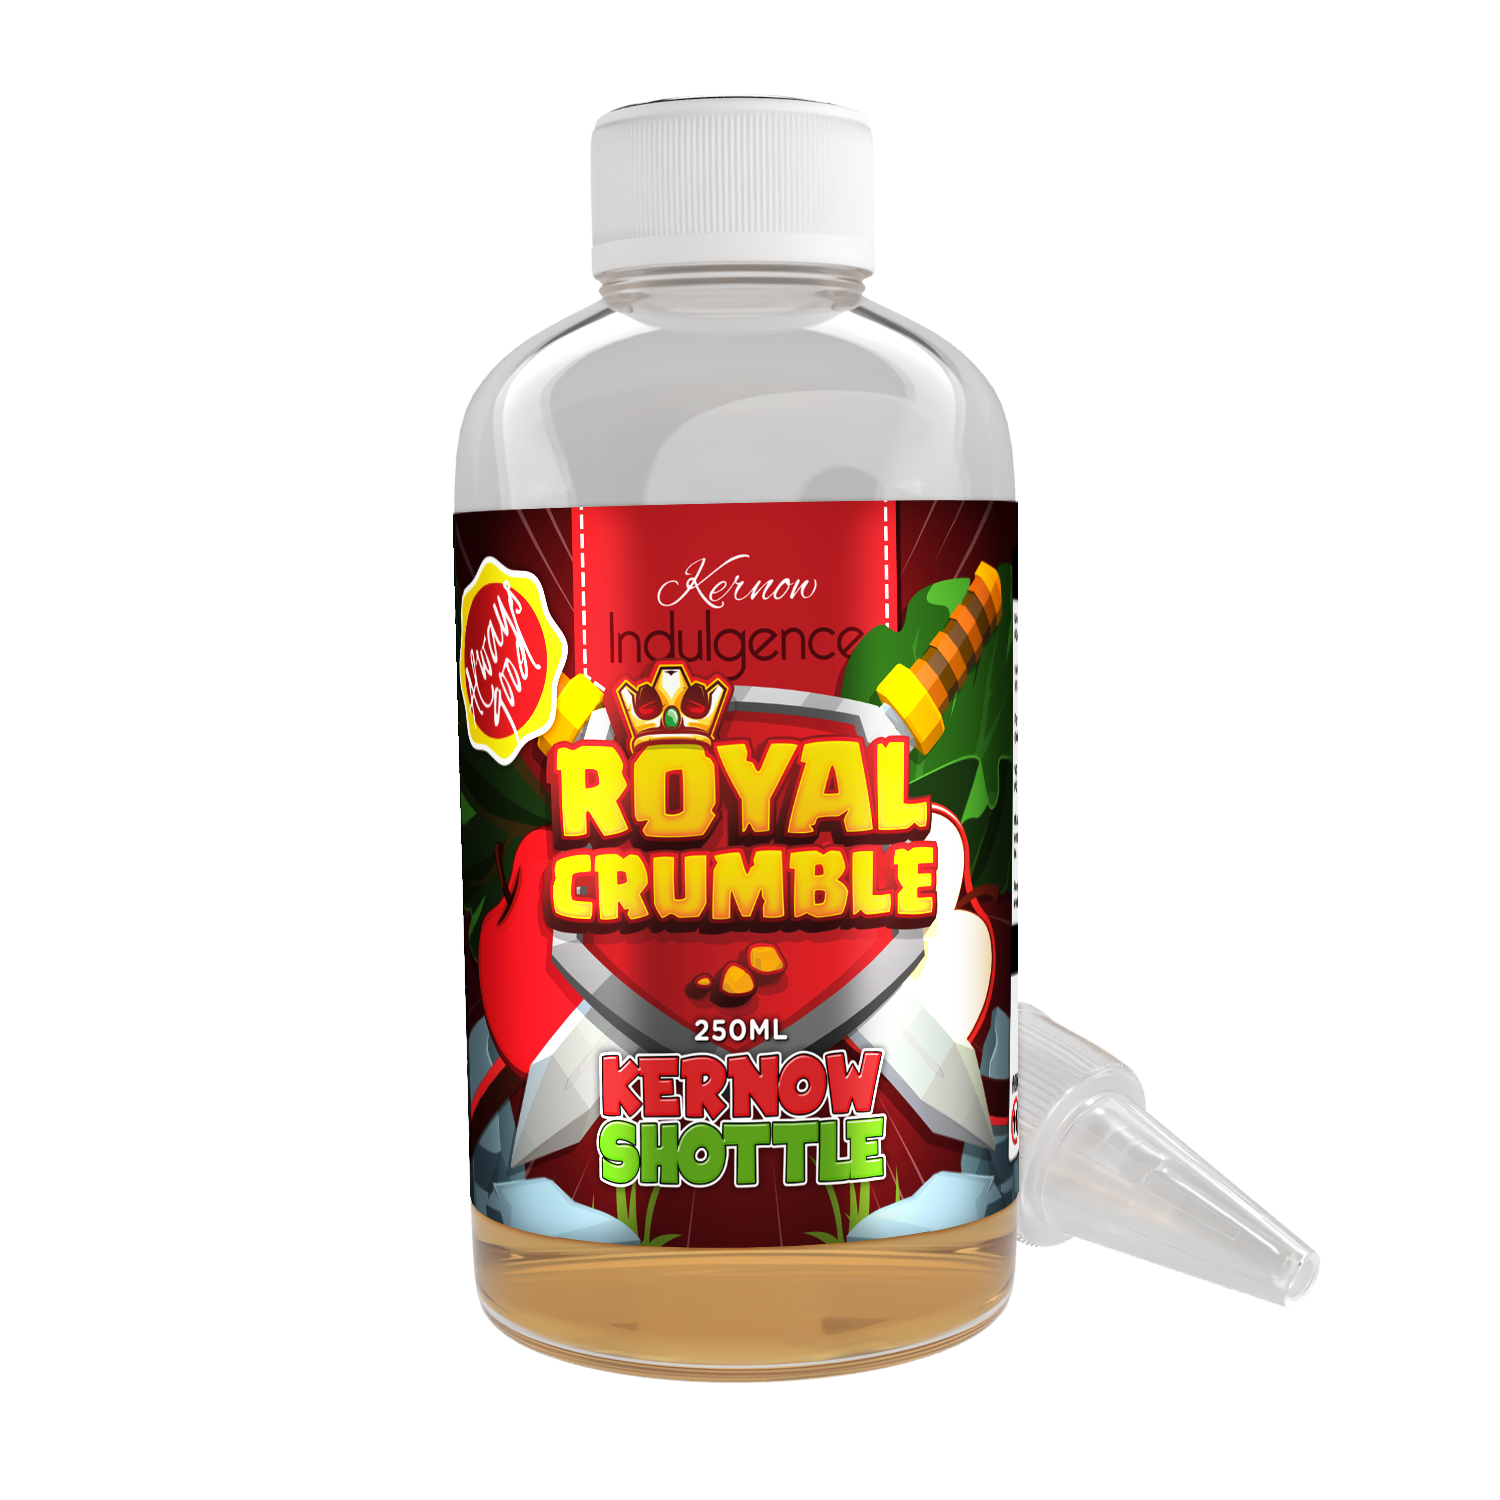 Royal Crumble Shottle Flavour Shot by Kernow - 250ml